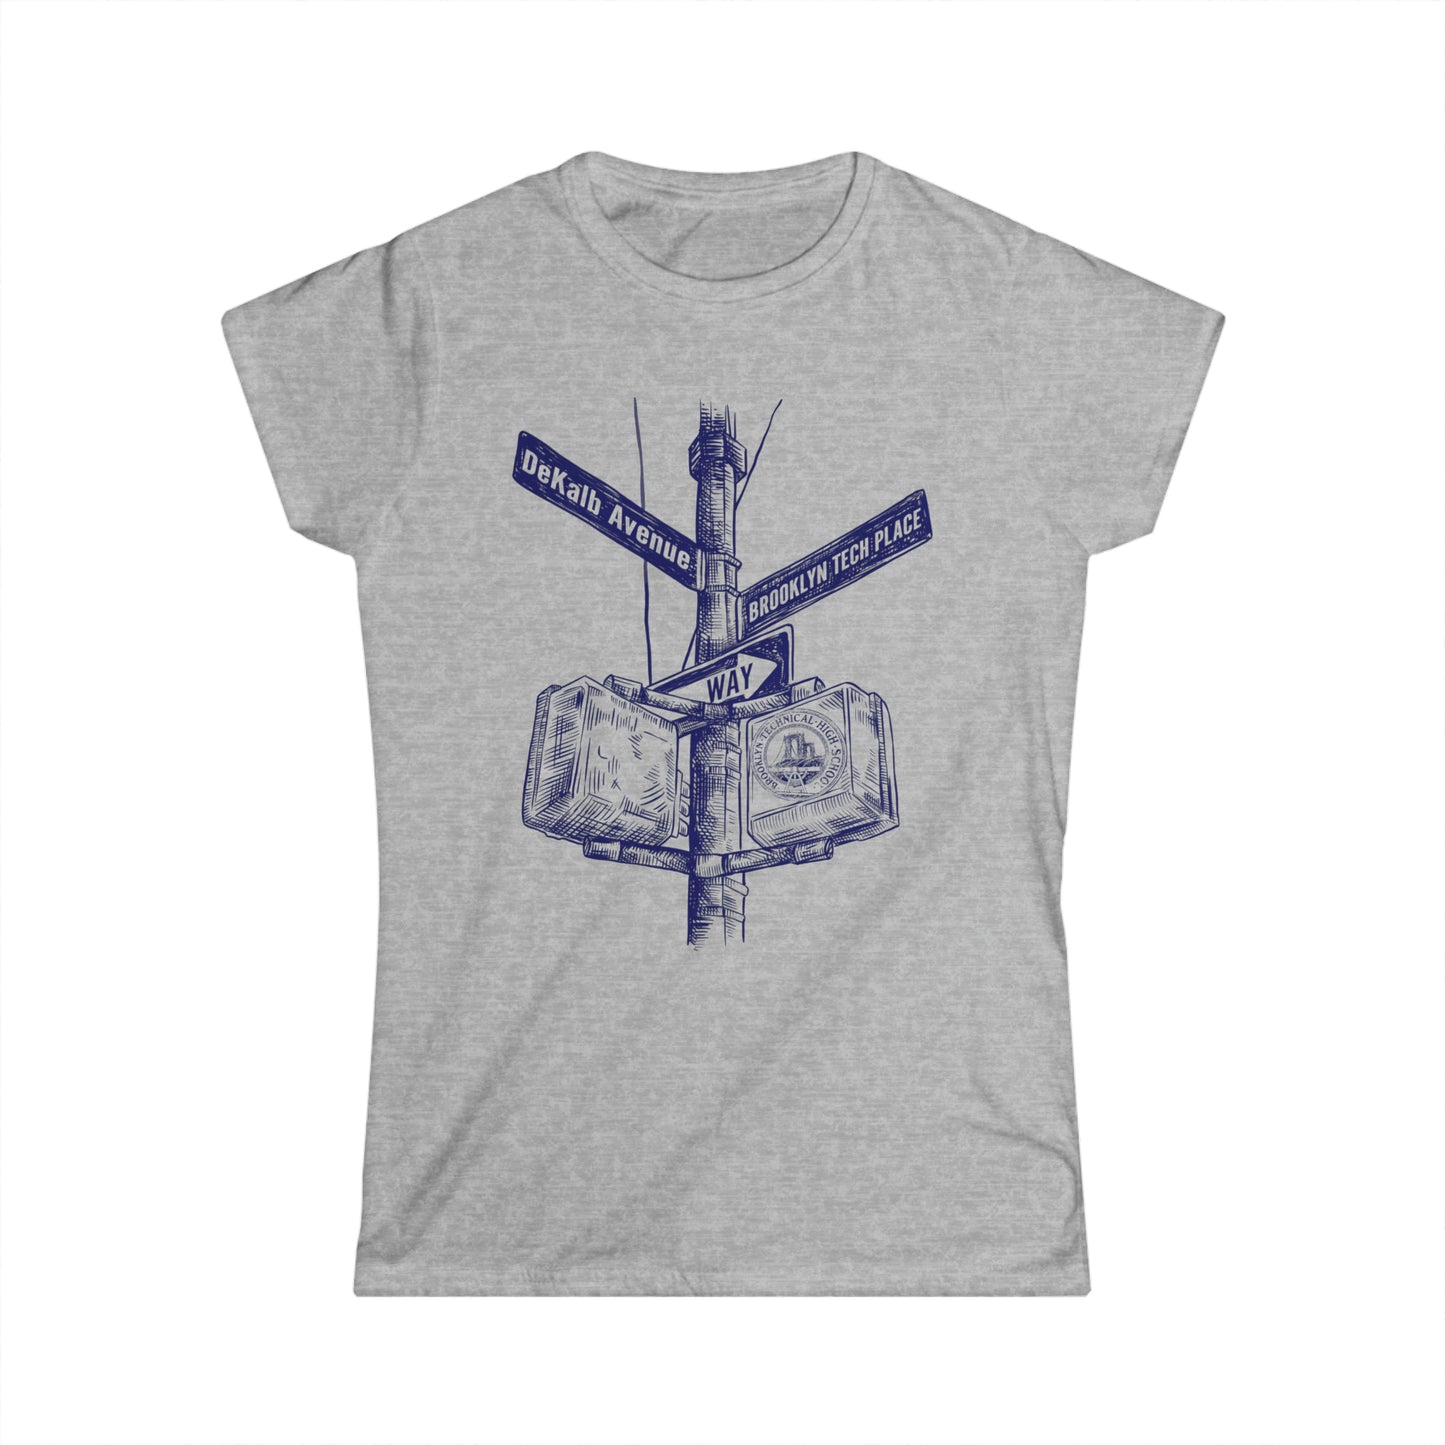 Boutique - Dekalb Ave & Brooklyn Tech Pl - Ladies Softstyle T-Shirt - (blue Graphic)